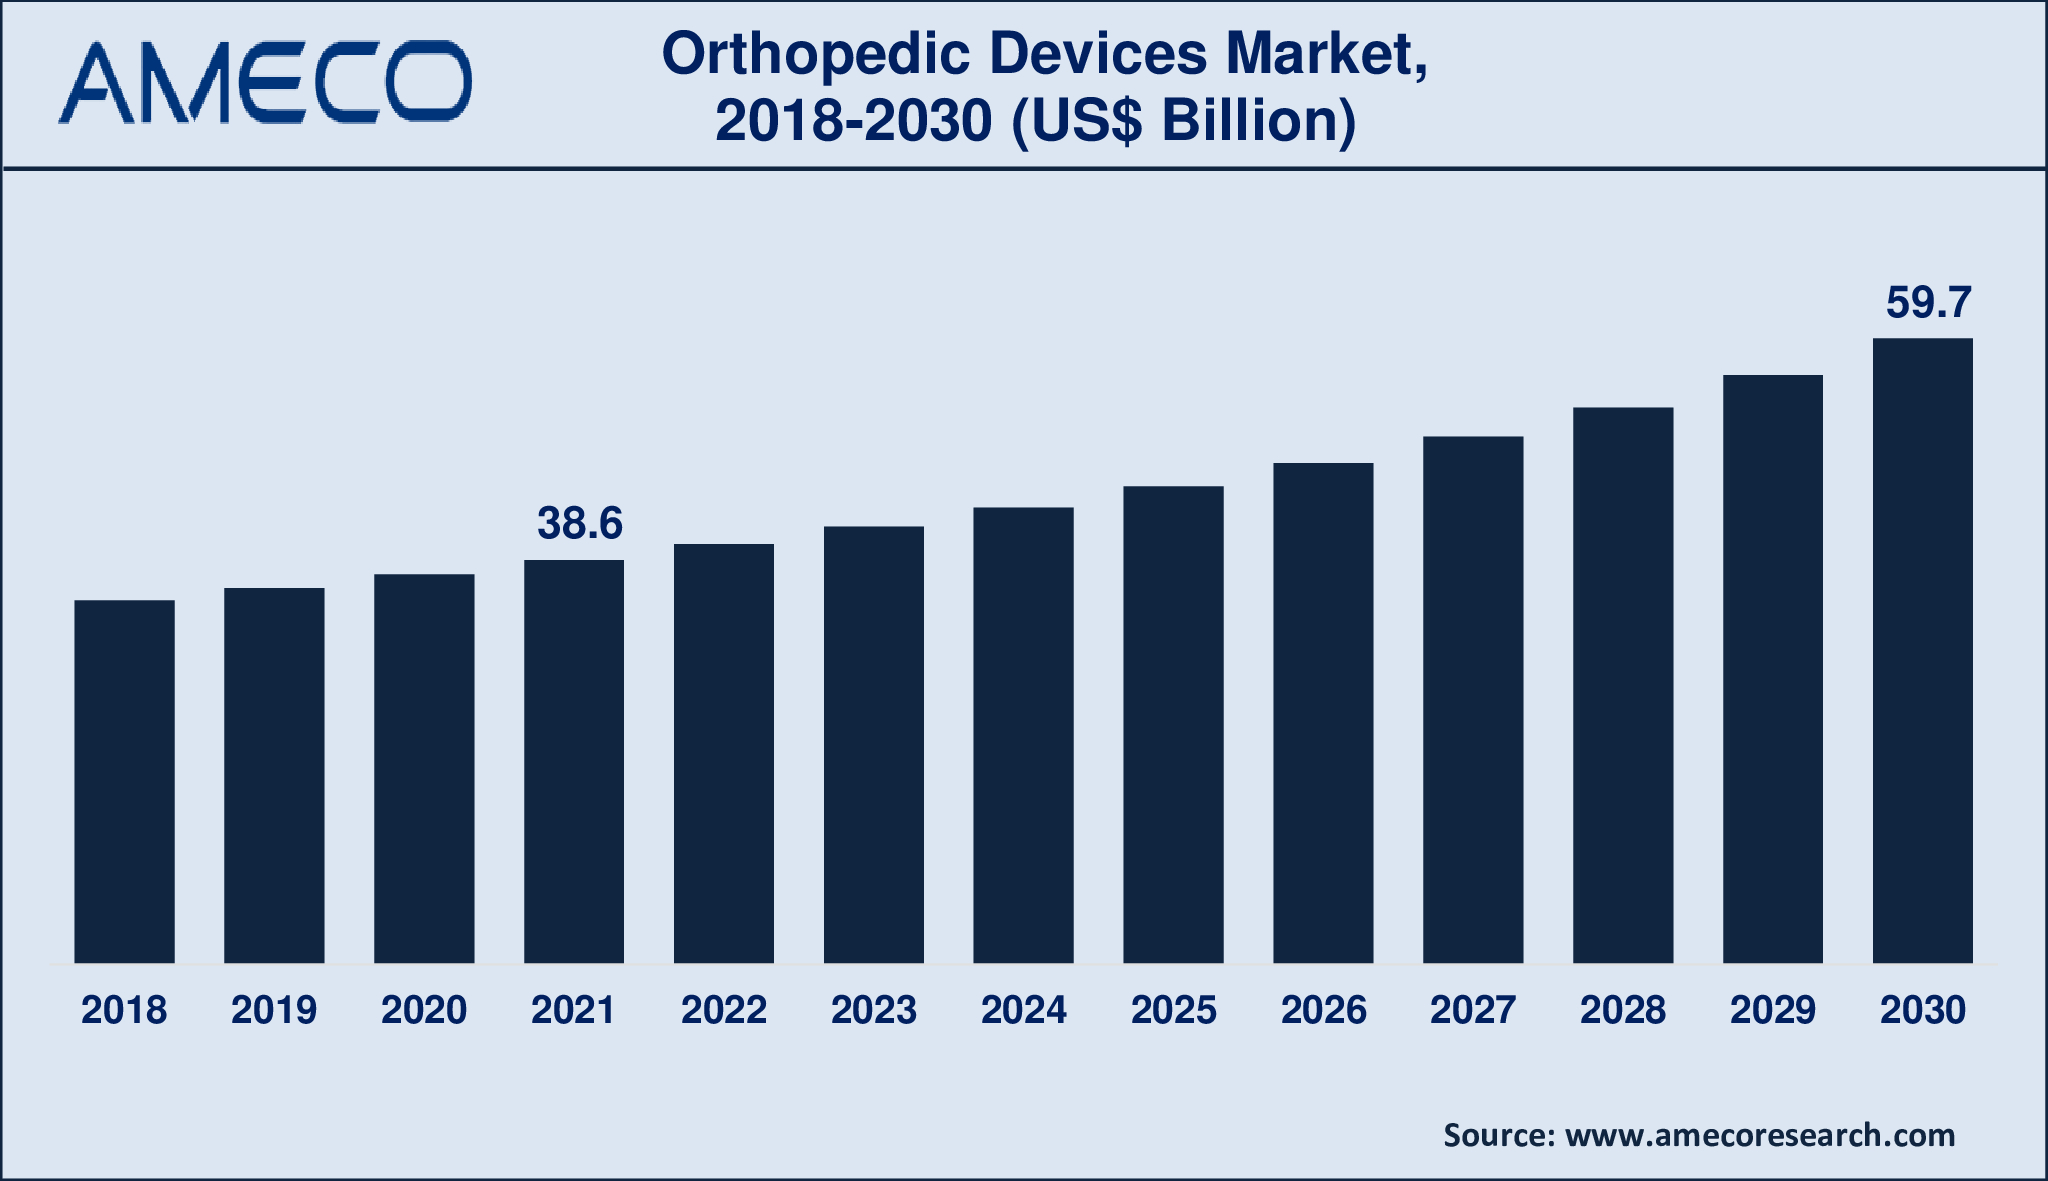 Orthopedic Devices Market Dynamics